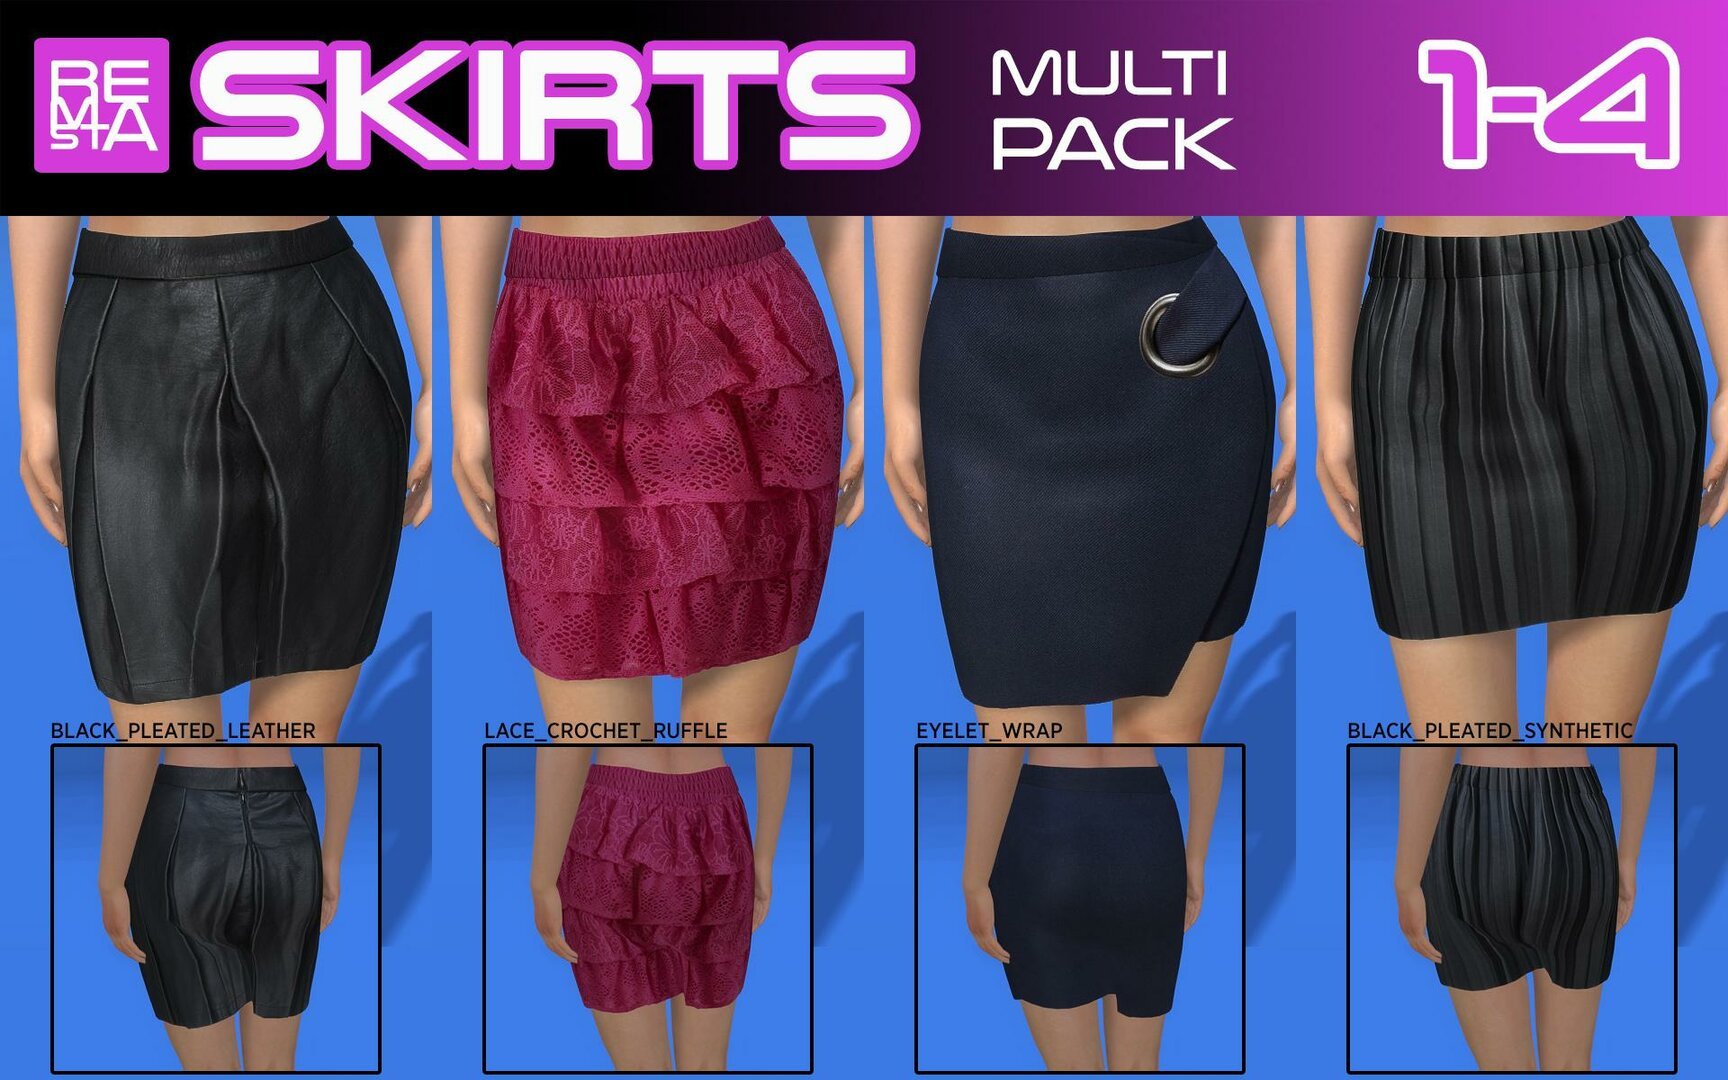 61484750_re_skirts_multi_pack_1-4.jpg